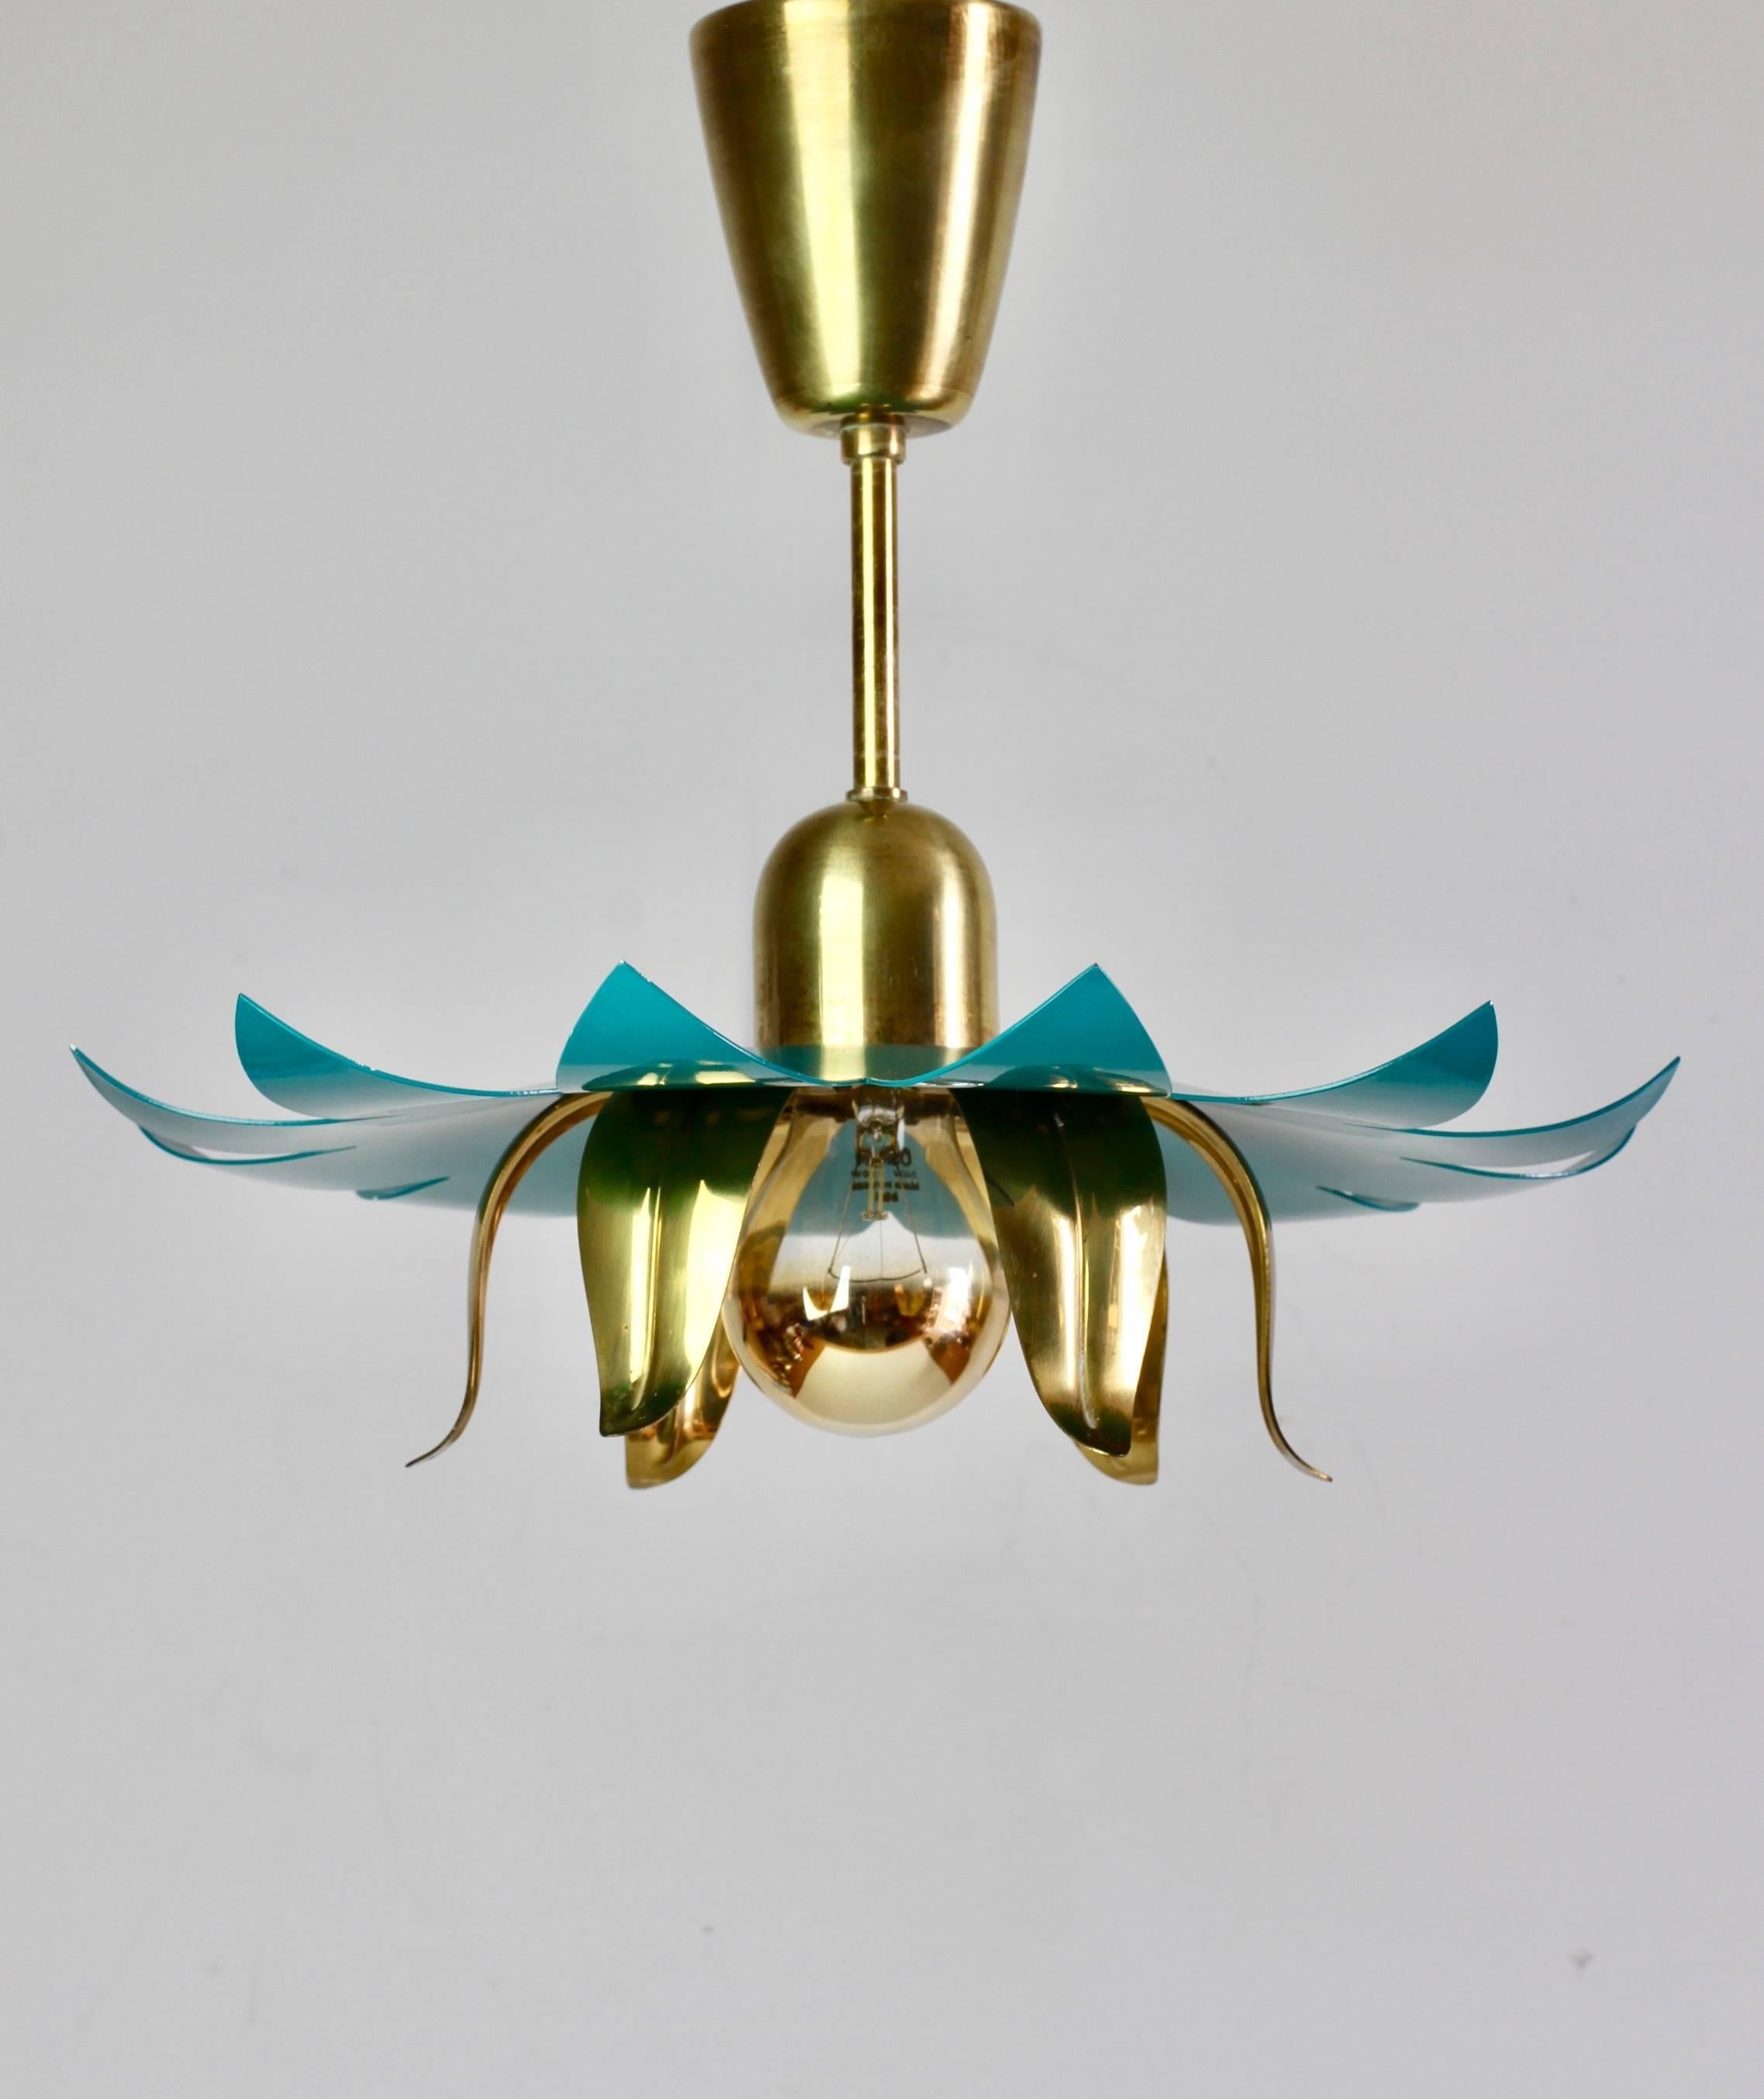 1950s Italian Stilnovo Style Brass and Turquoise Flower Pendant Light Fixture 2